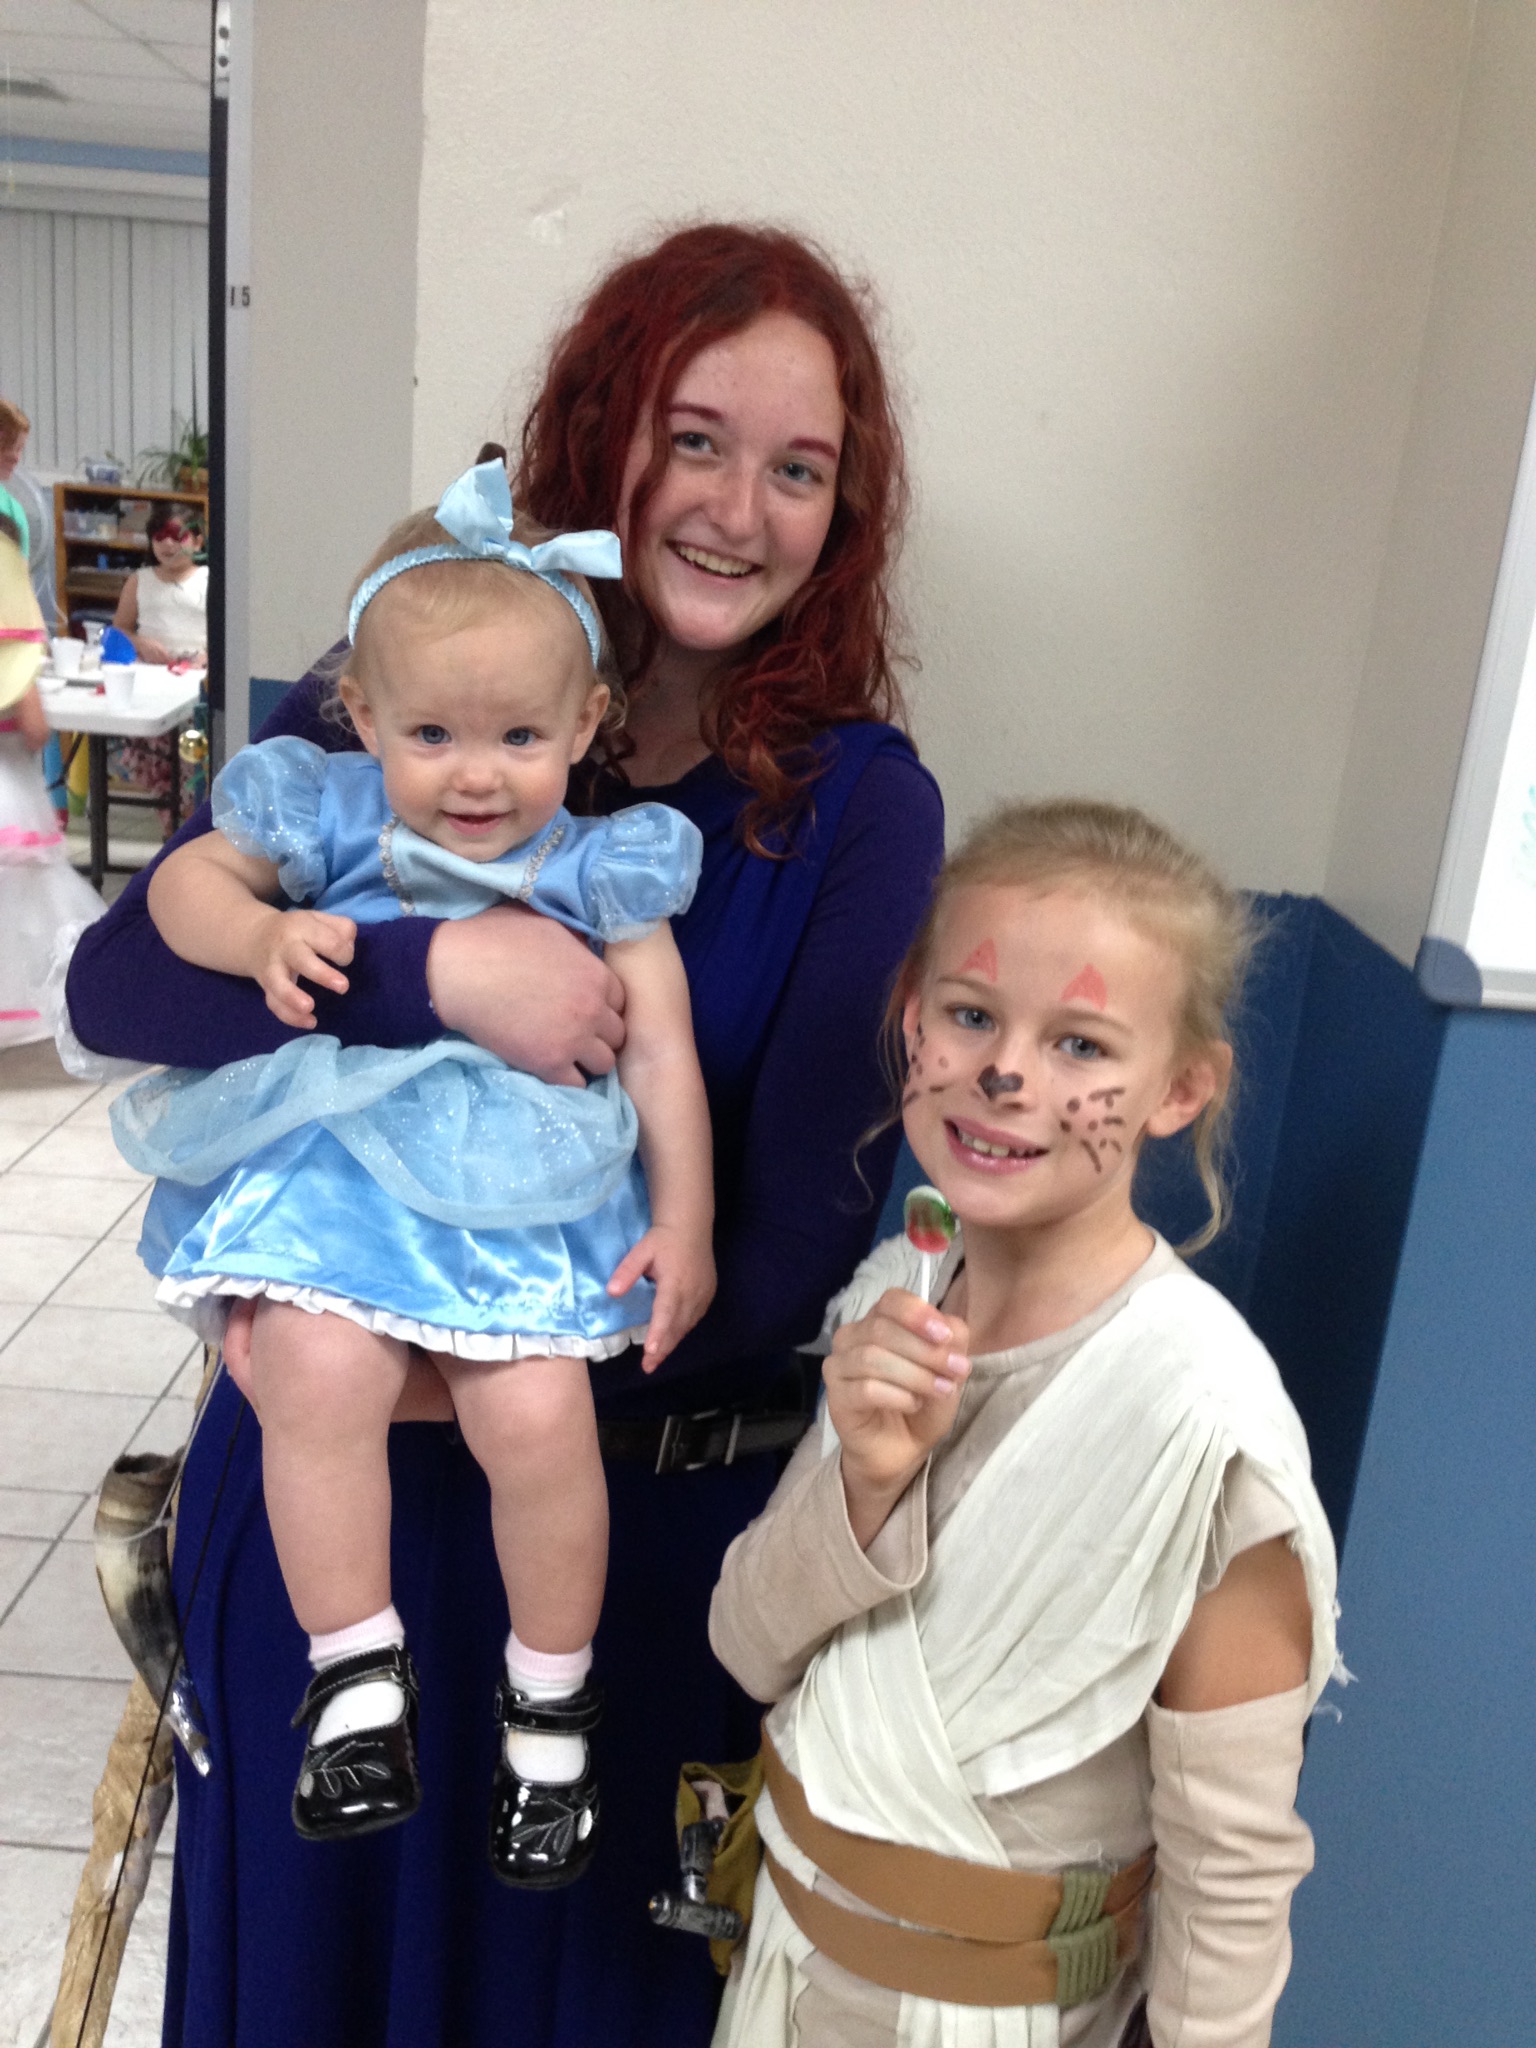 Lily dressed as Cinderella, cousin Bonnie dressed as Merida, and Elayne dressed as Rey